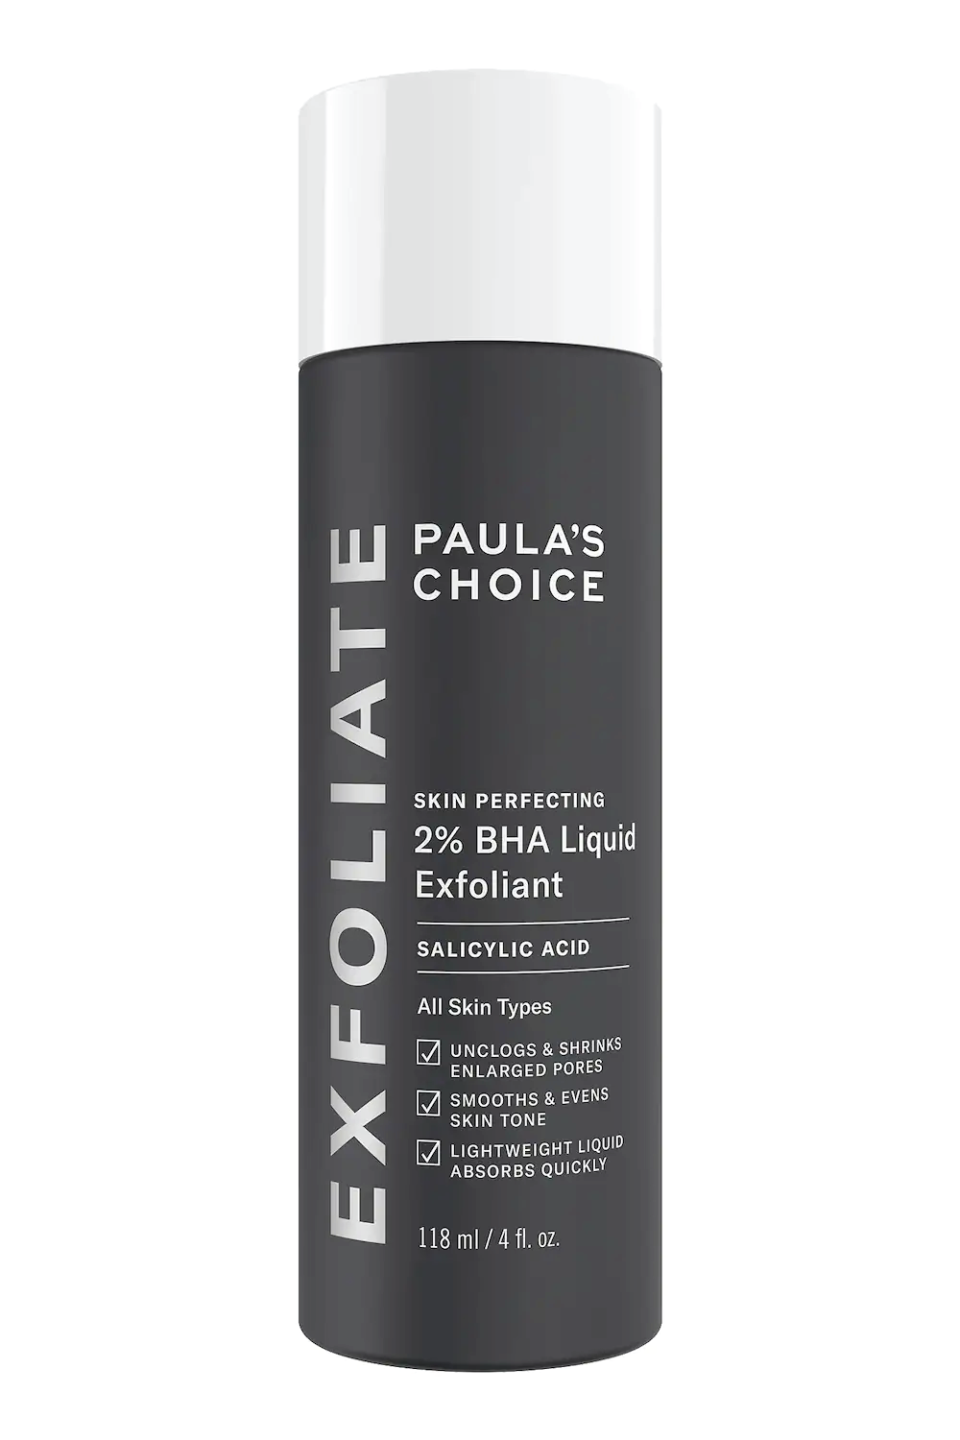 4) Paula's Choice Skin Perfecting 2% BHA Liquid Exfoliant